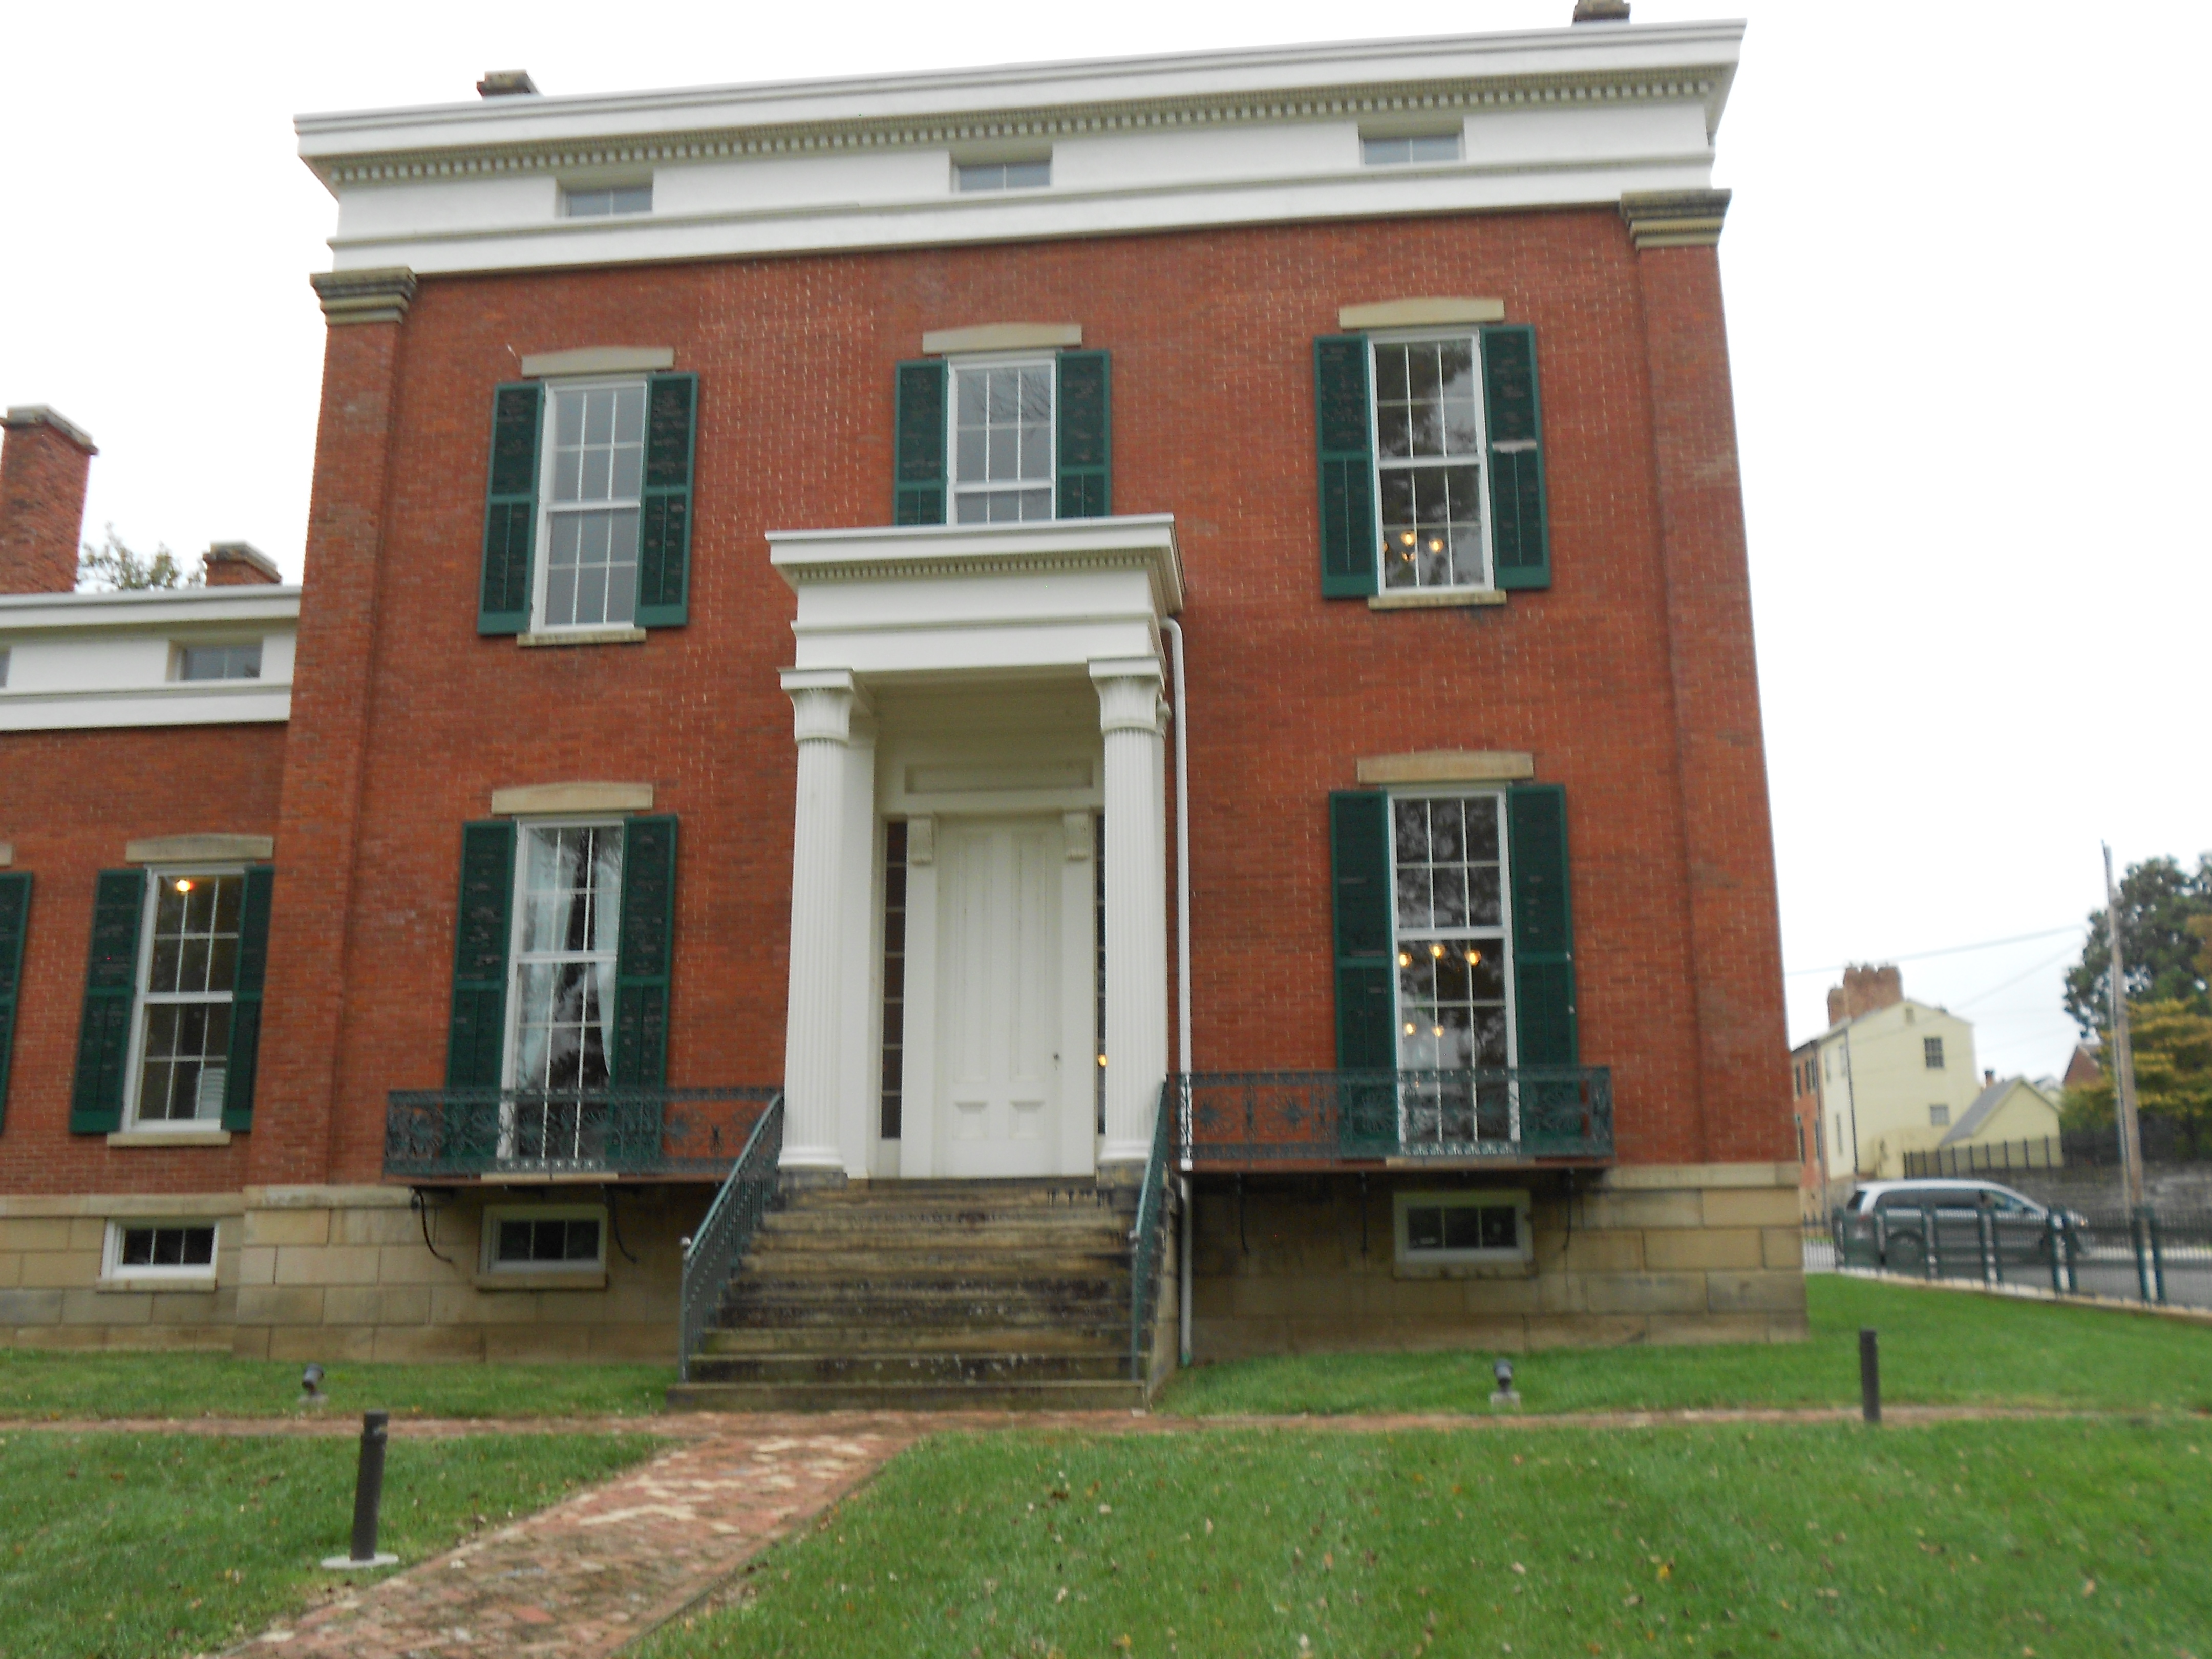 Shrewsbury-Windle House Museum - Madison, IN